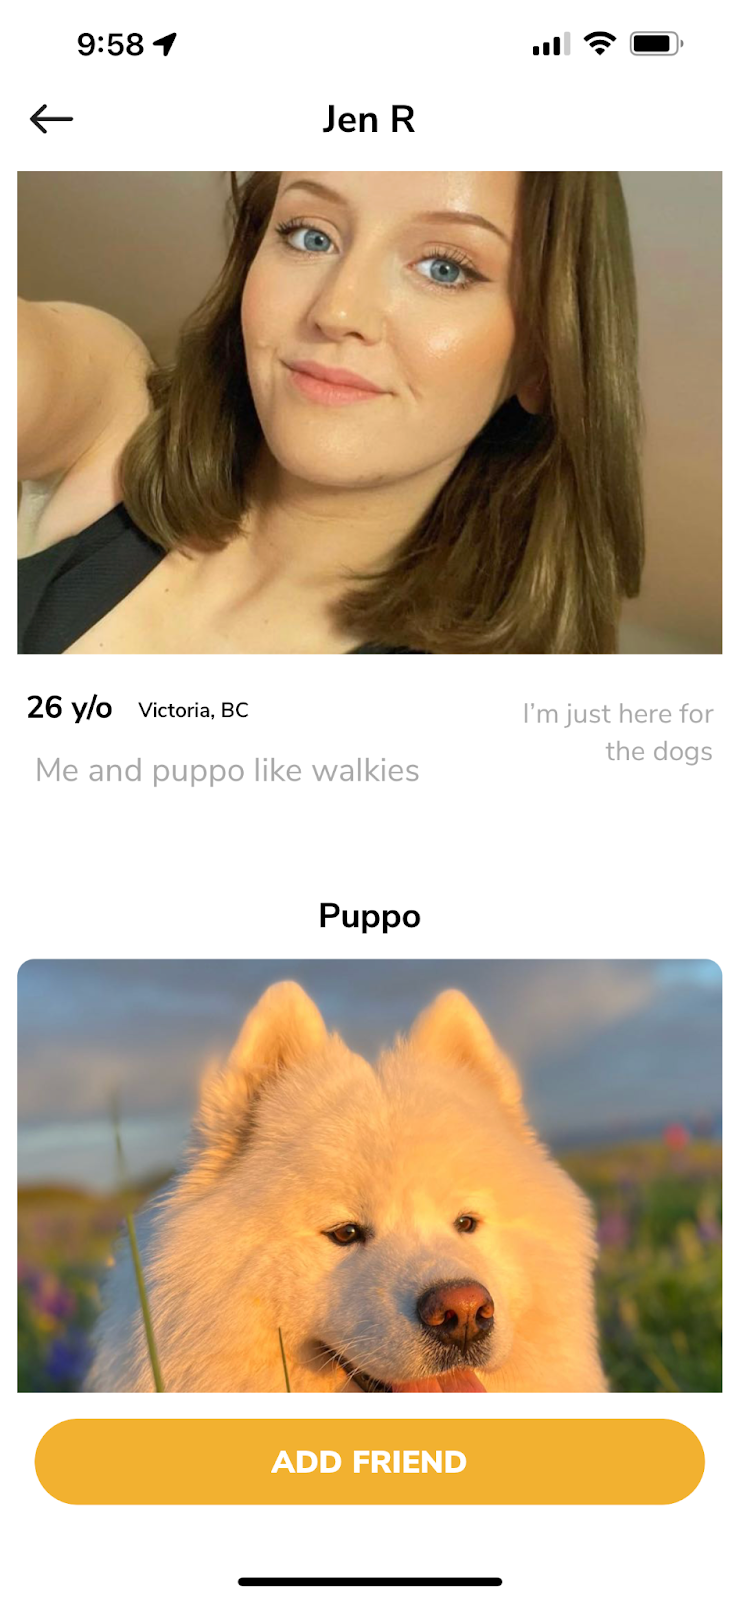 doggy-date-app-friend